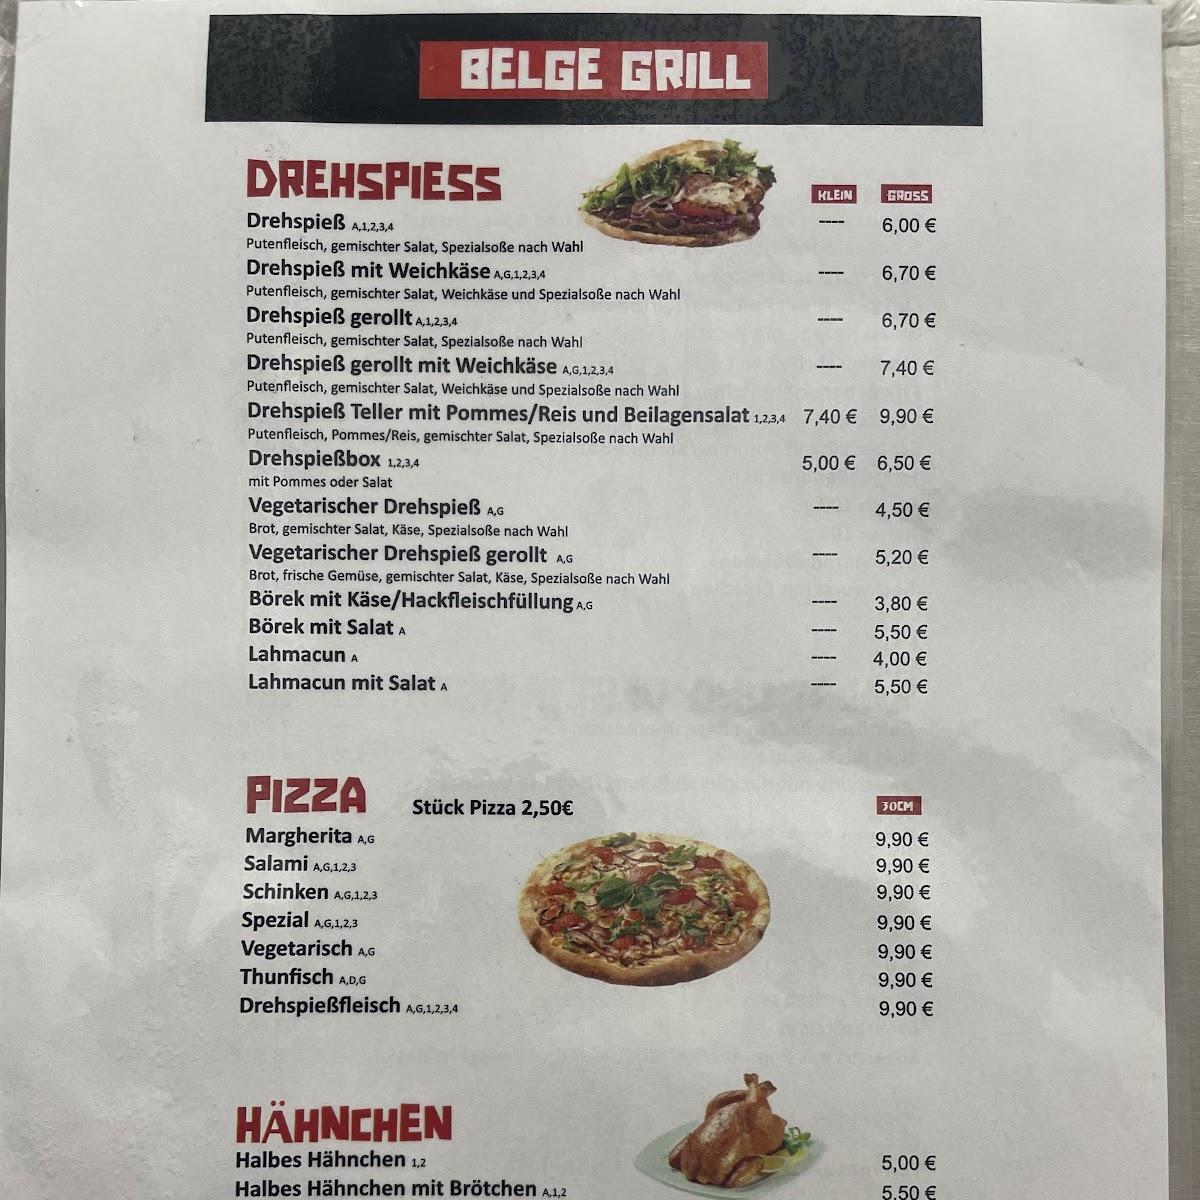 Restaurant "Belge Grill" in Lichtenfels